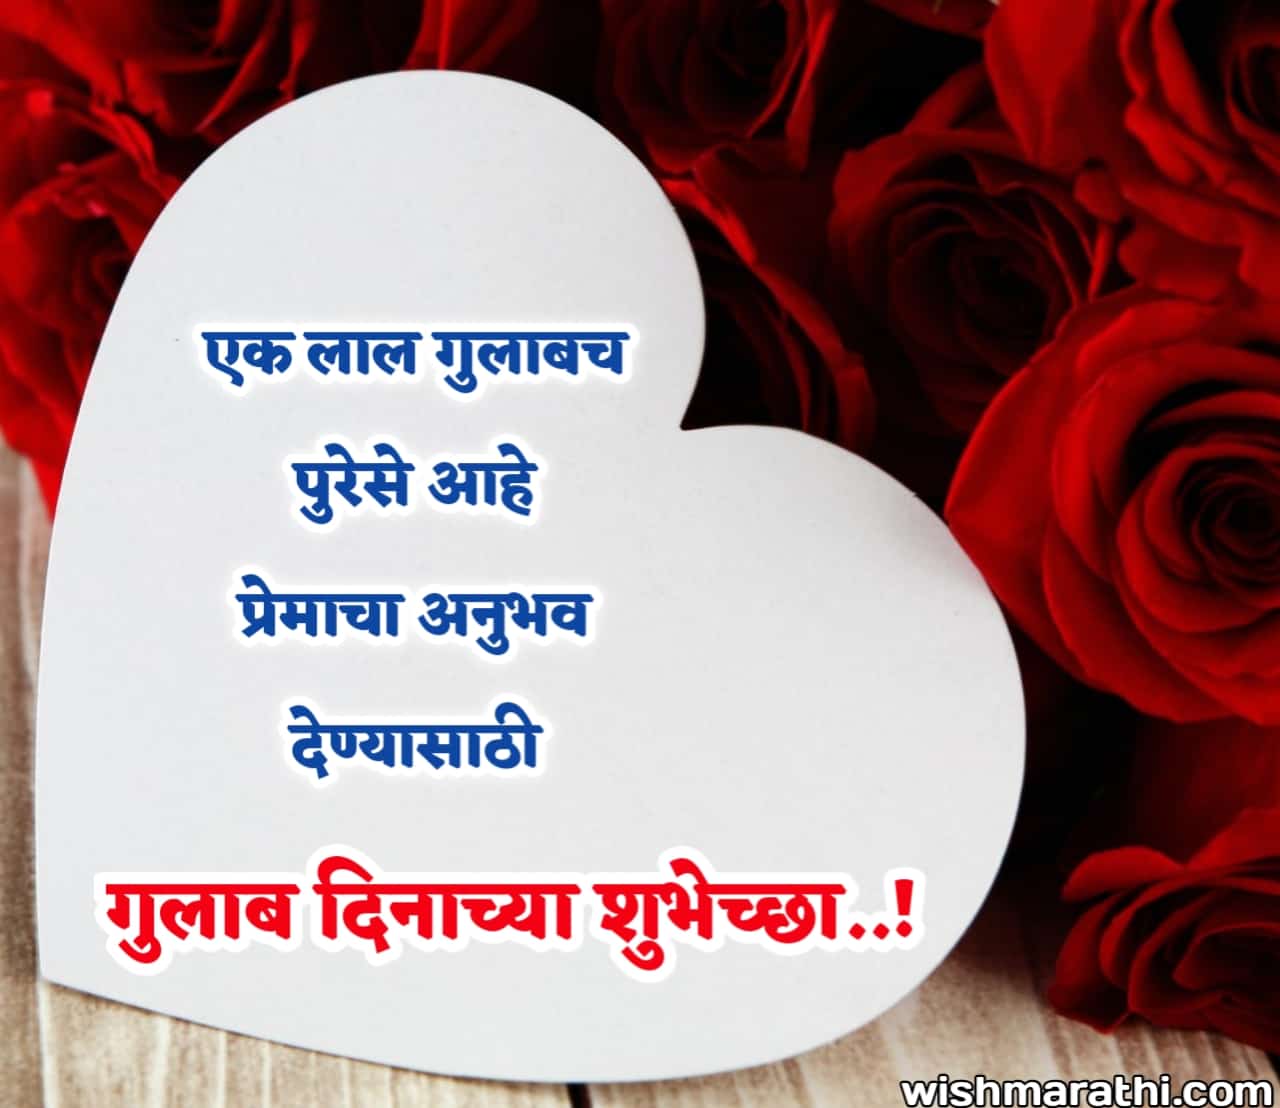 rose day images in marathi